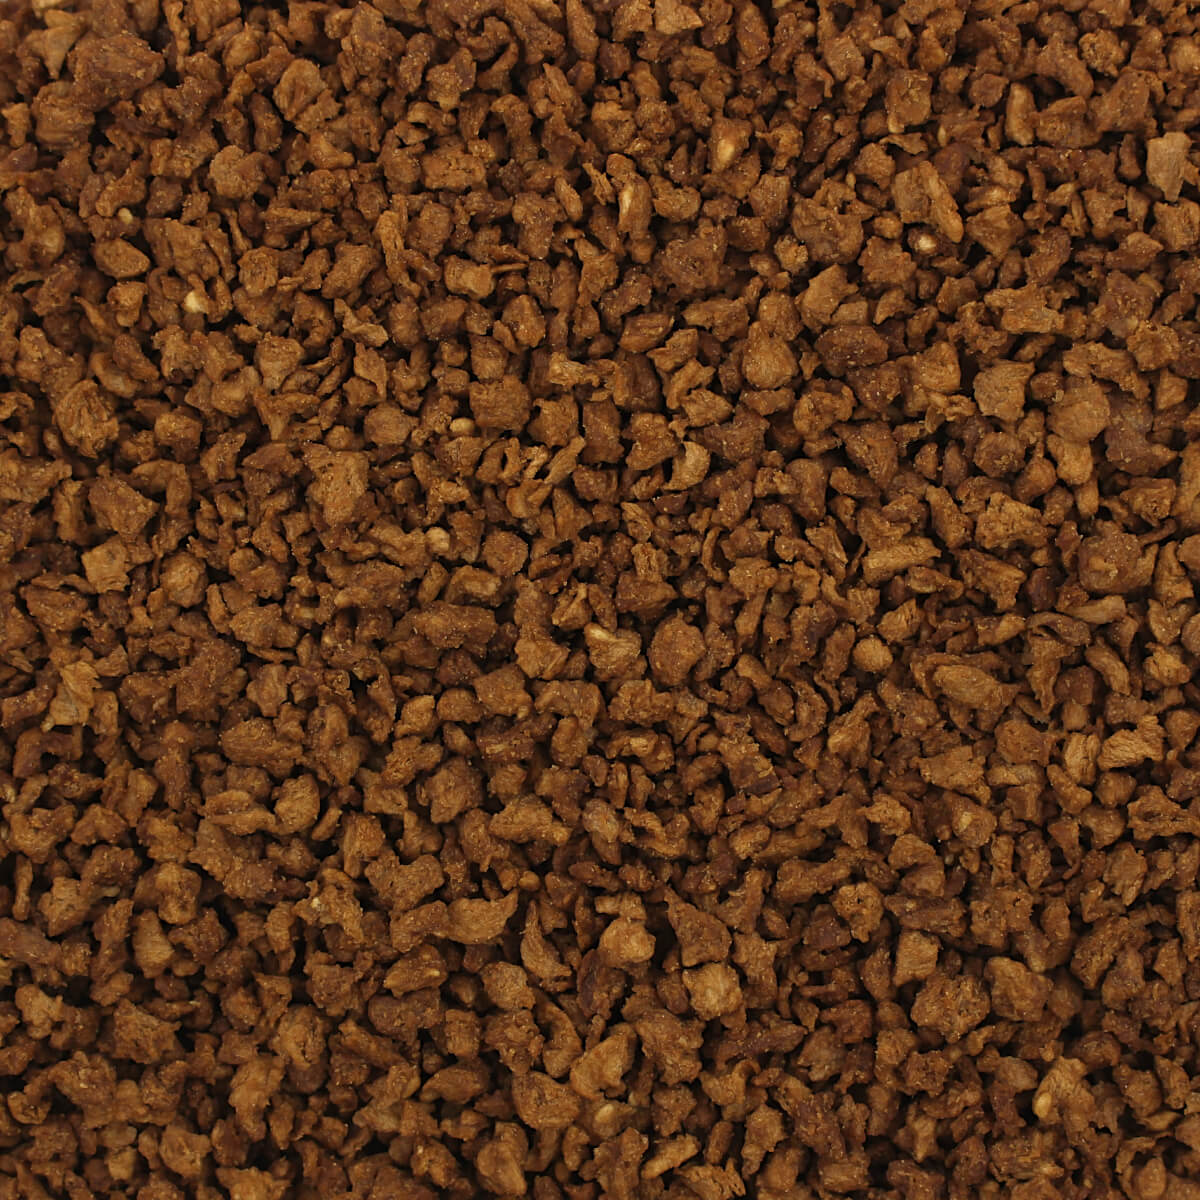 A brown ground.